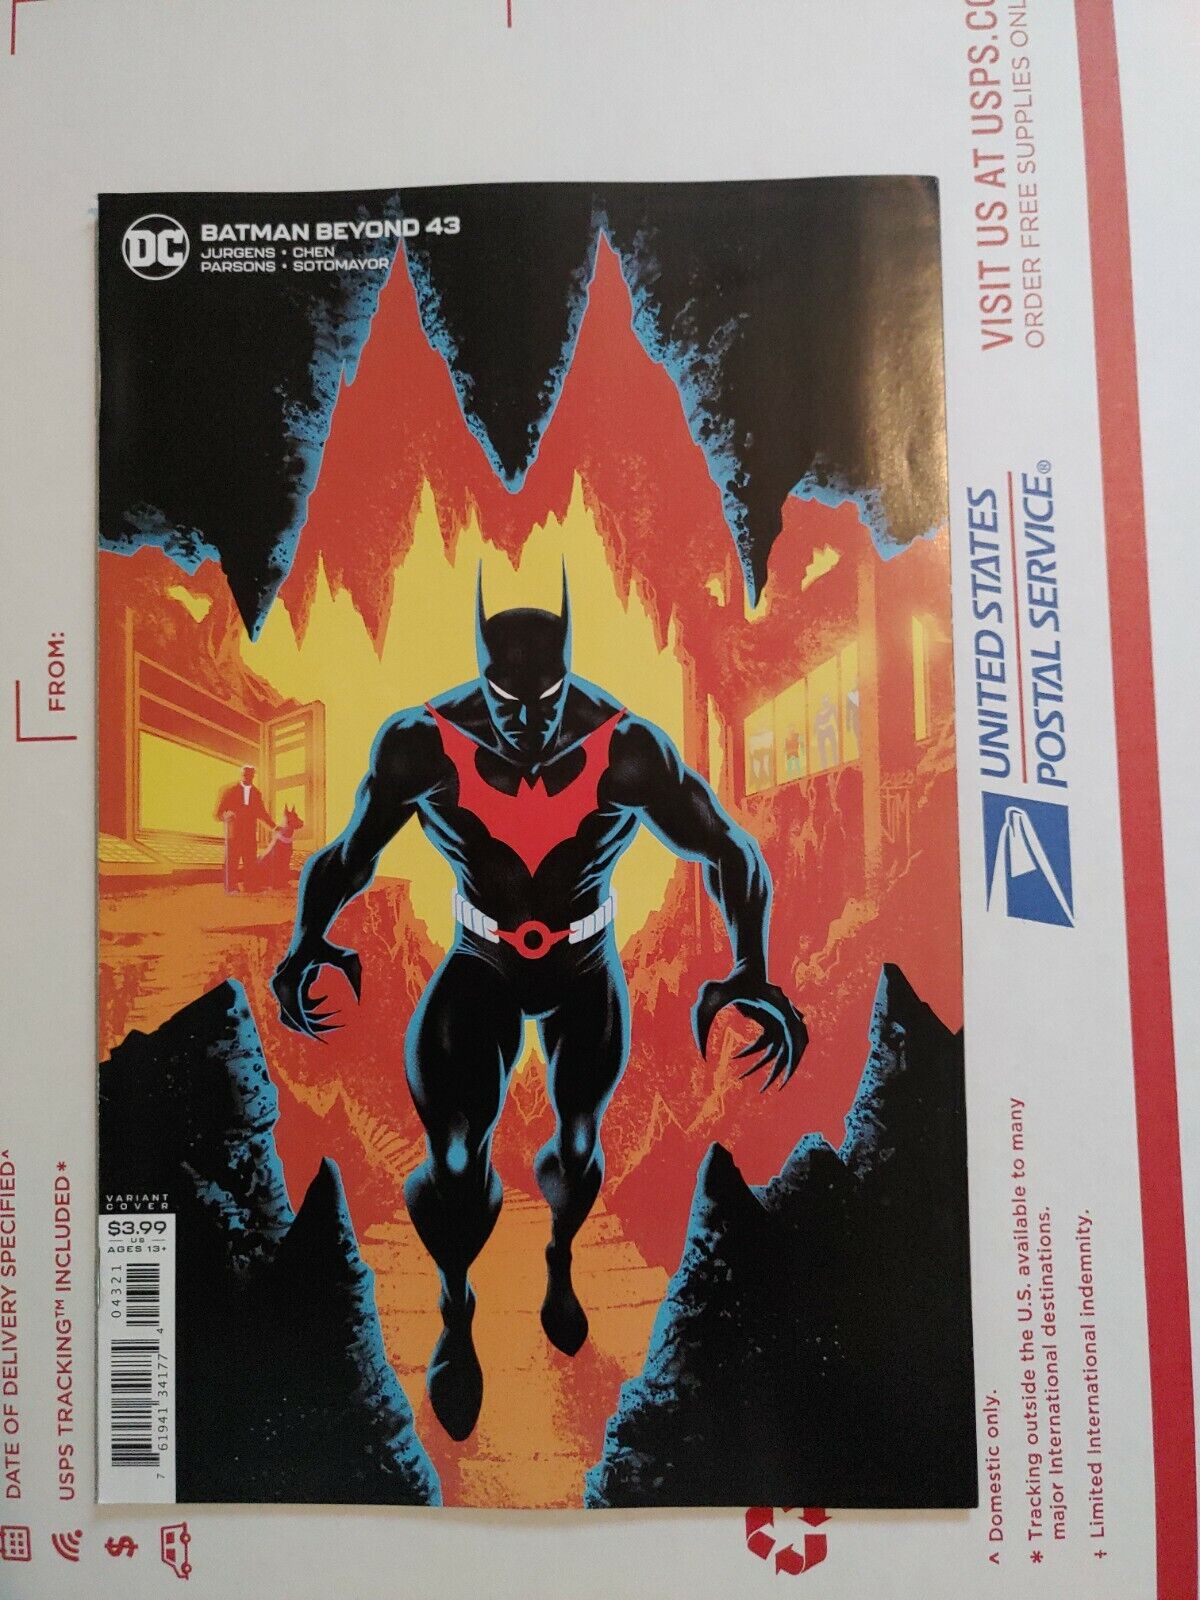 DC COMICS BATMAN BEYOND #43 FRANCIS MANAPUL VARIANT EDITION